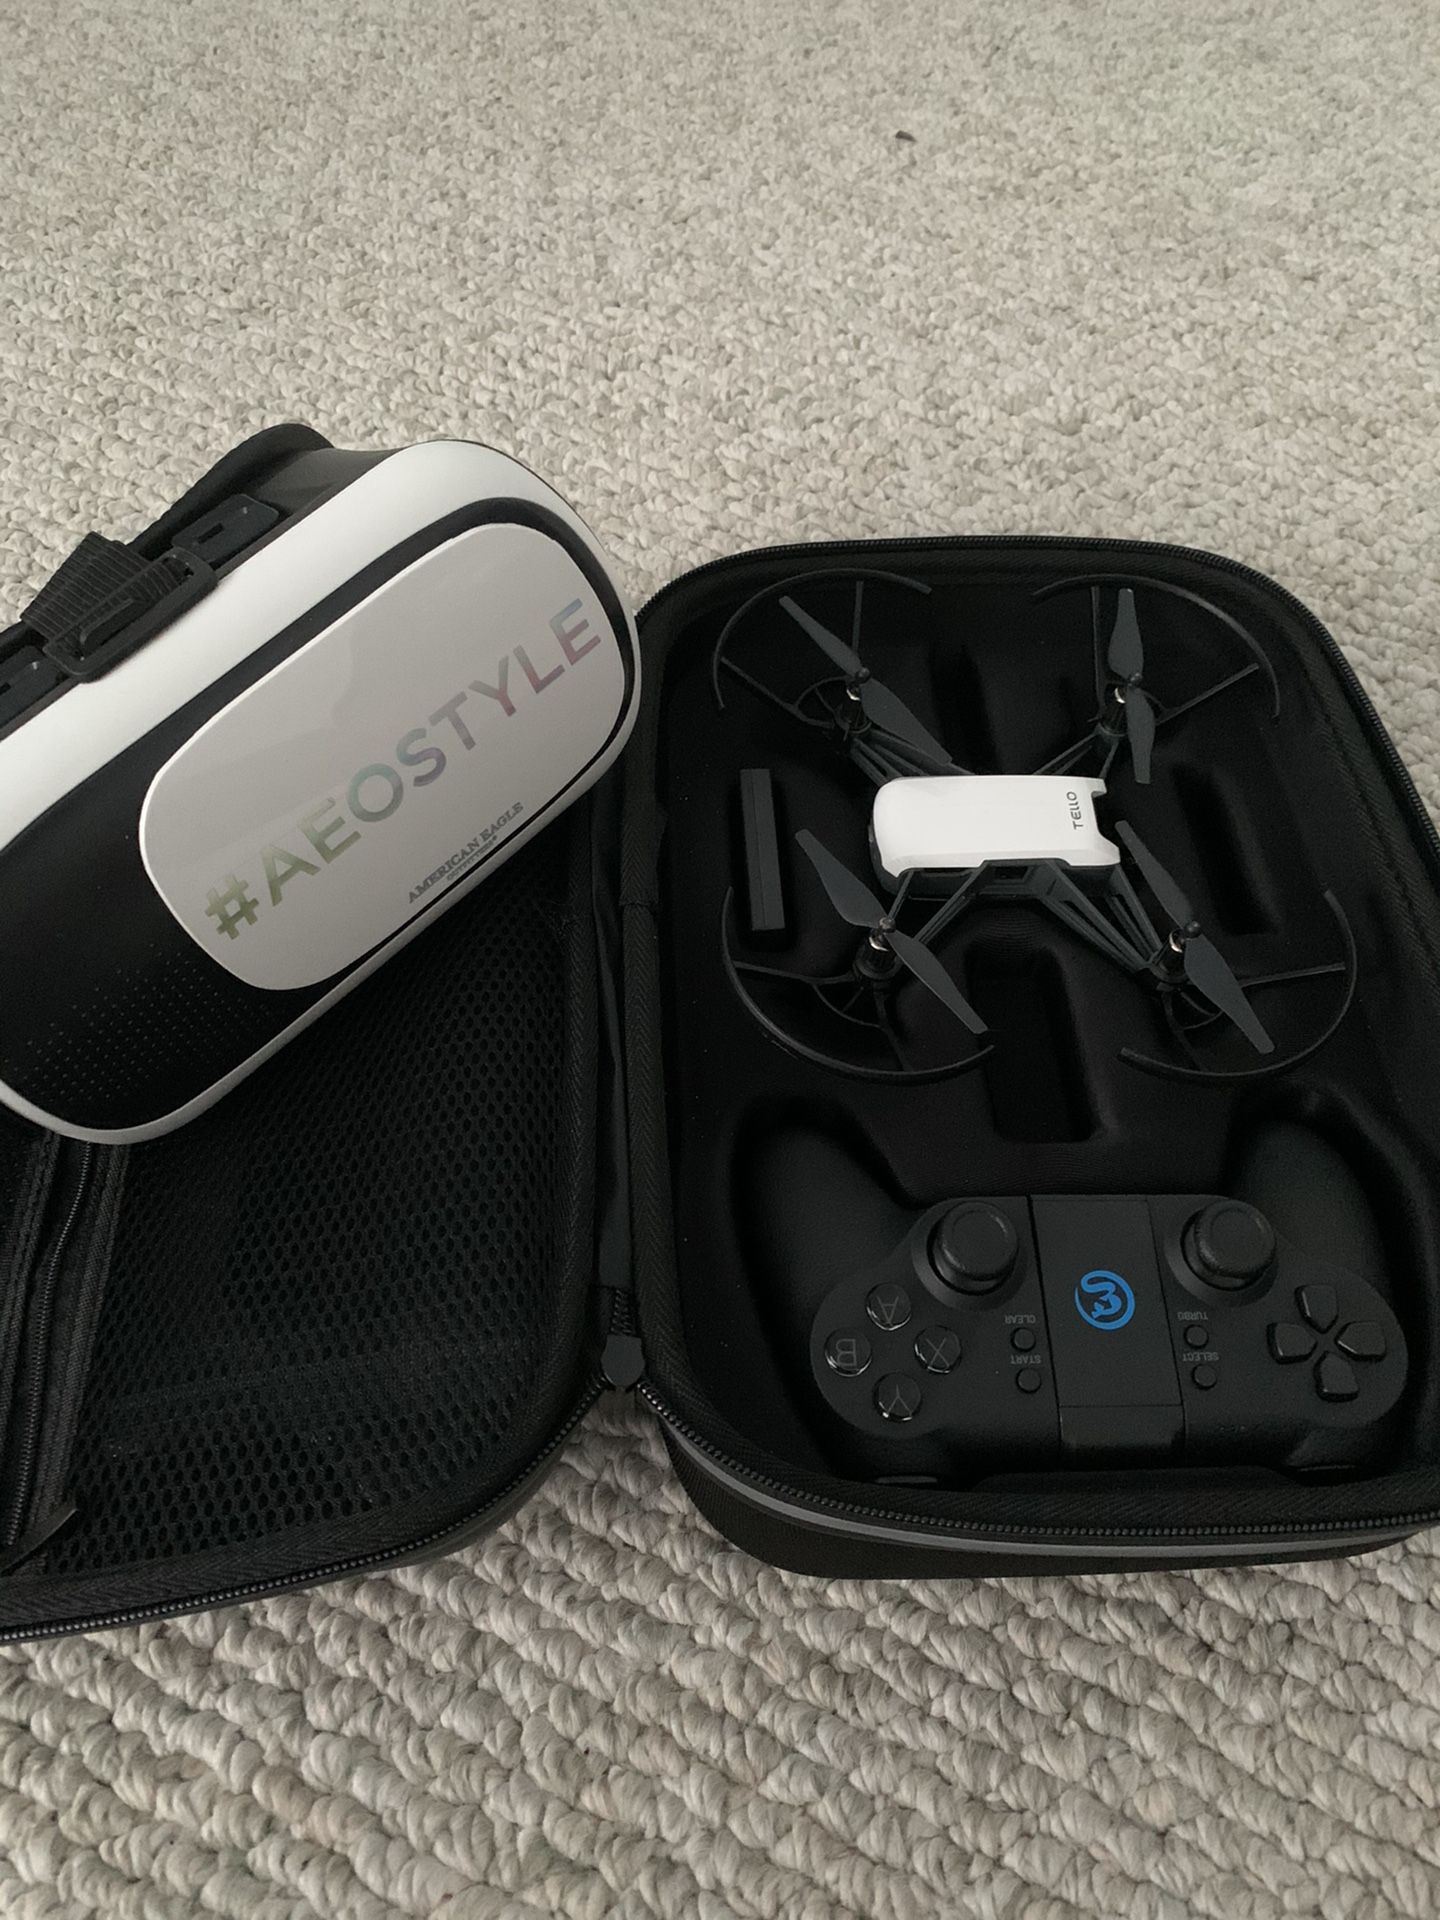 DJI Tello Drone - VR + Controller + Carrying Case